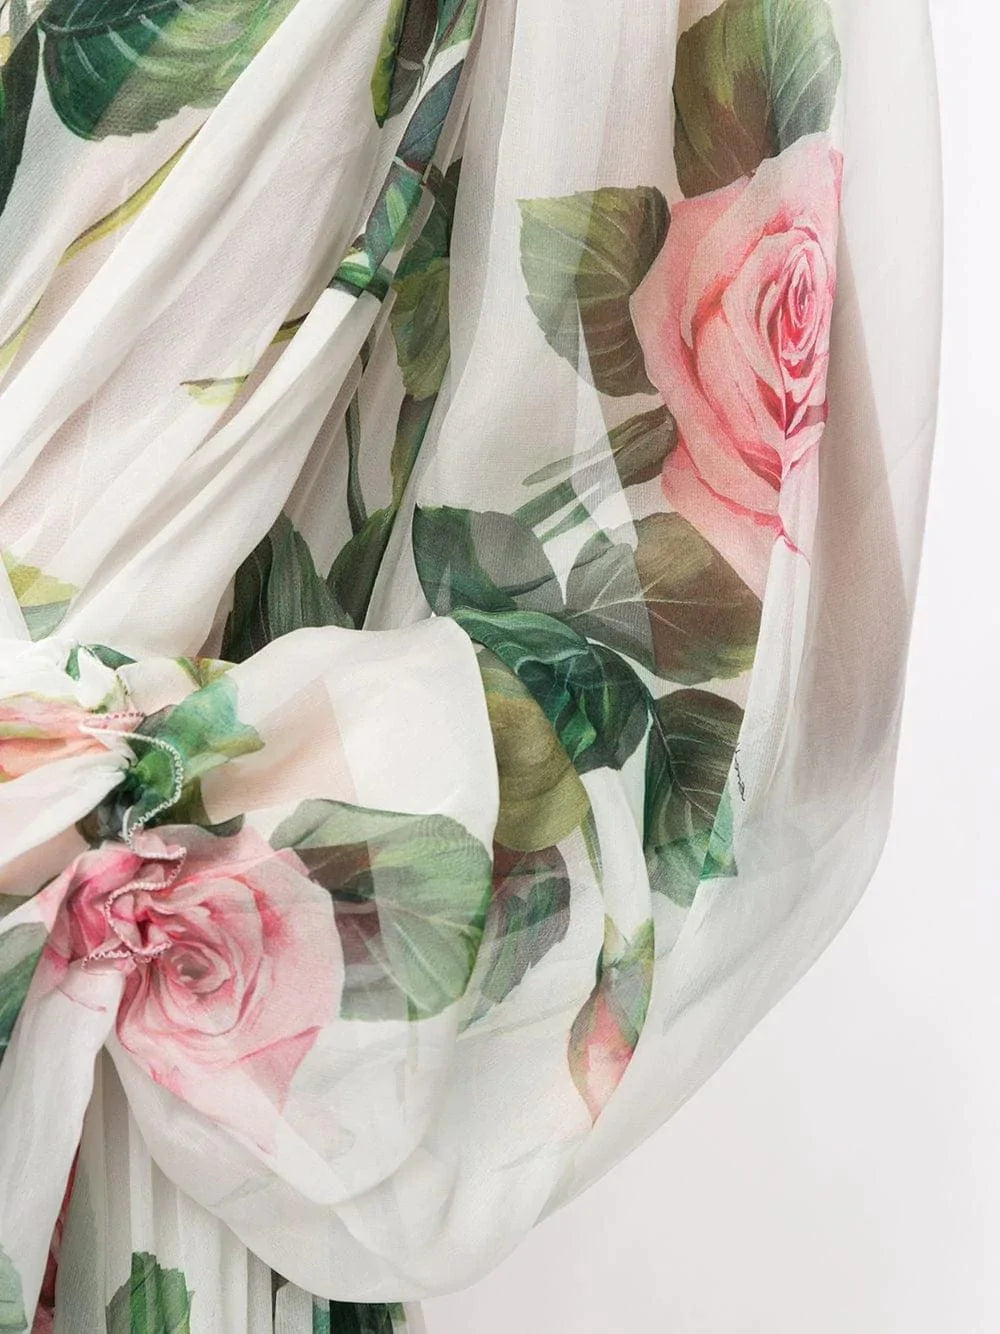 Dolce & Gabbana Rose-Print Belted Dress